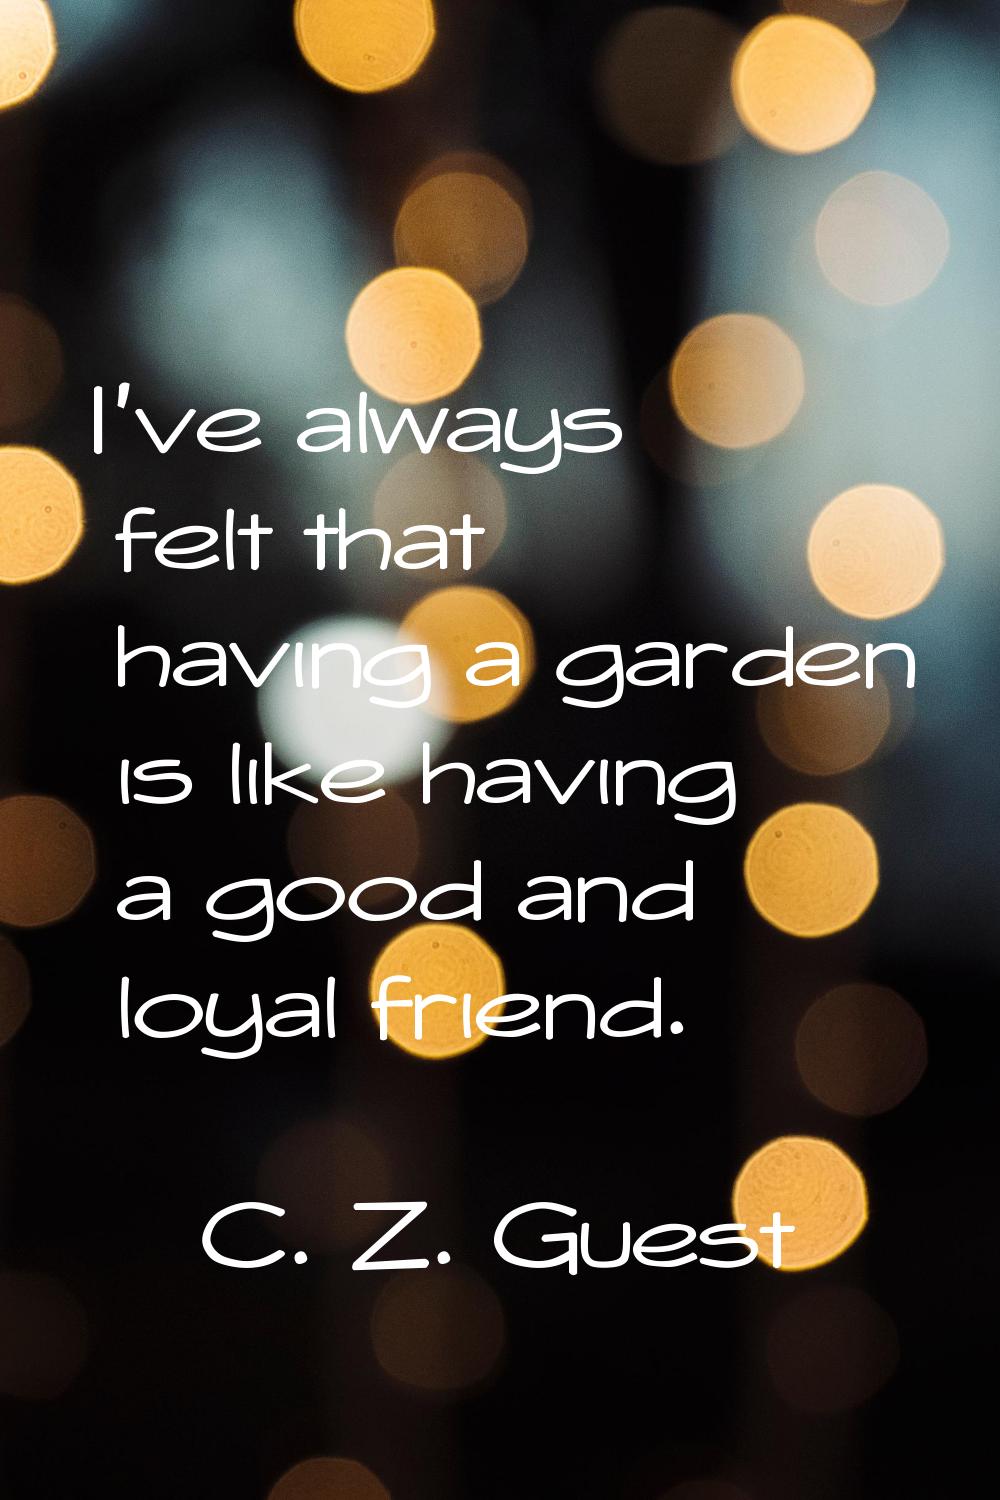 I've always felt that having a garden is like having a good and loyal friend.